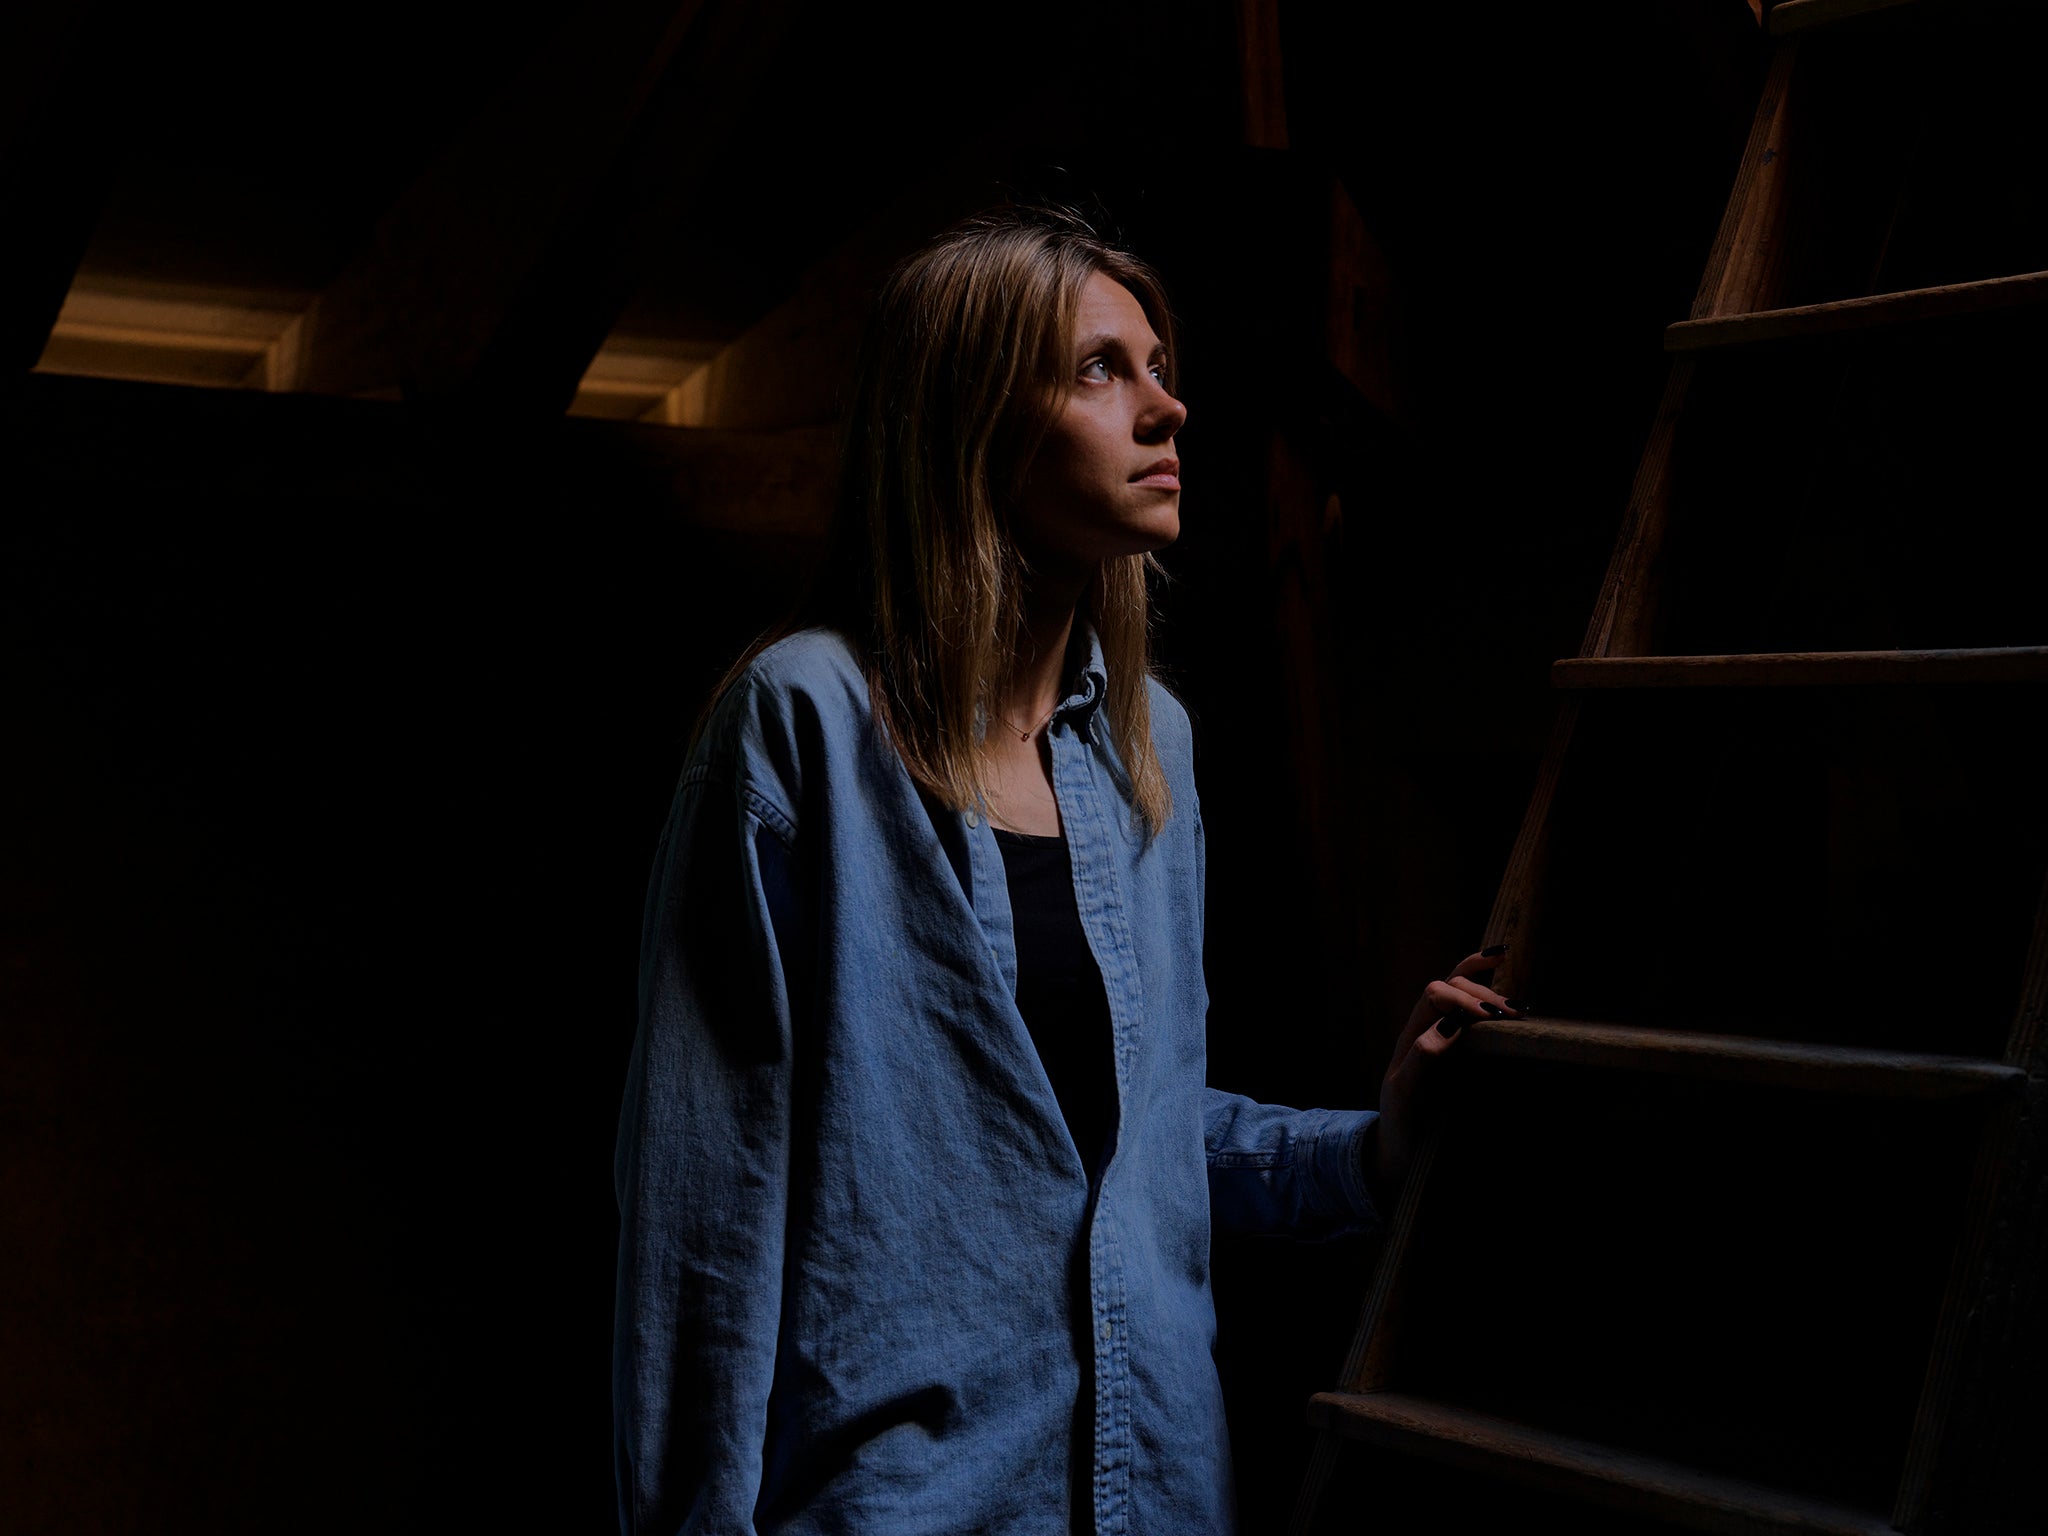 Hana, 28, from Odesa, looks through a window in the attic of Kloster Menzingen